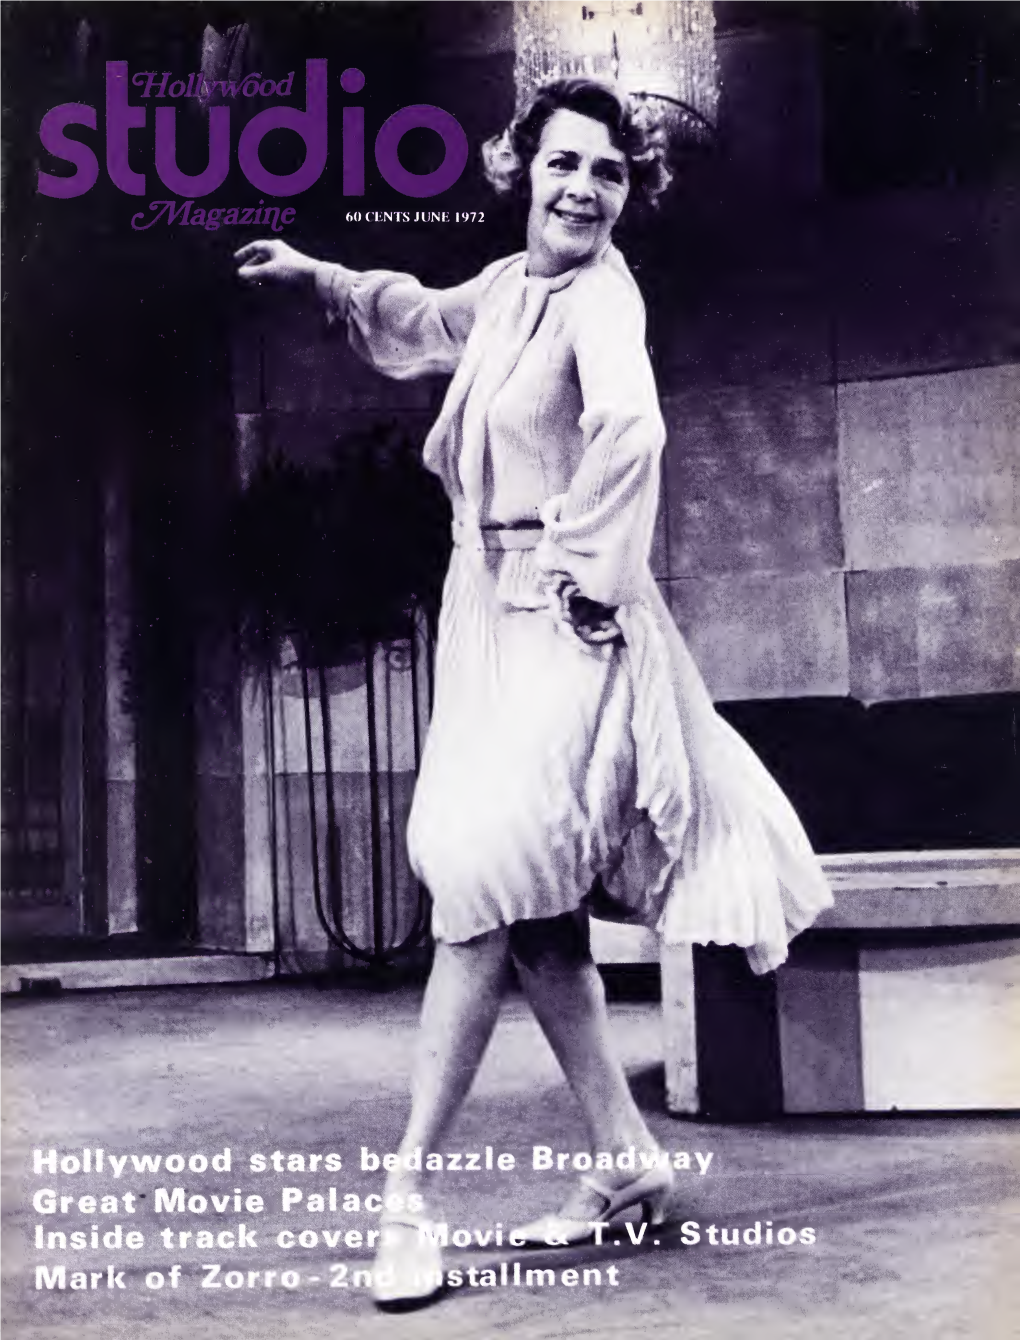 Hollywood Studio Magazine (June 1972)